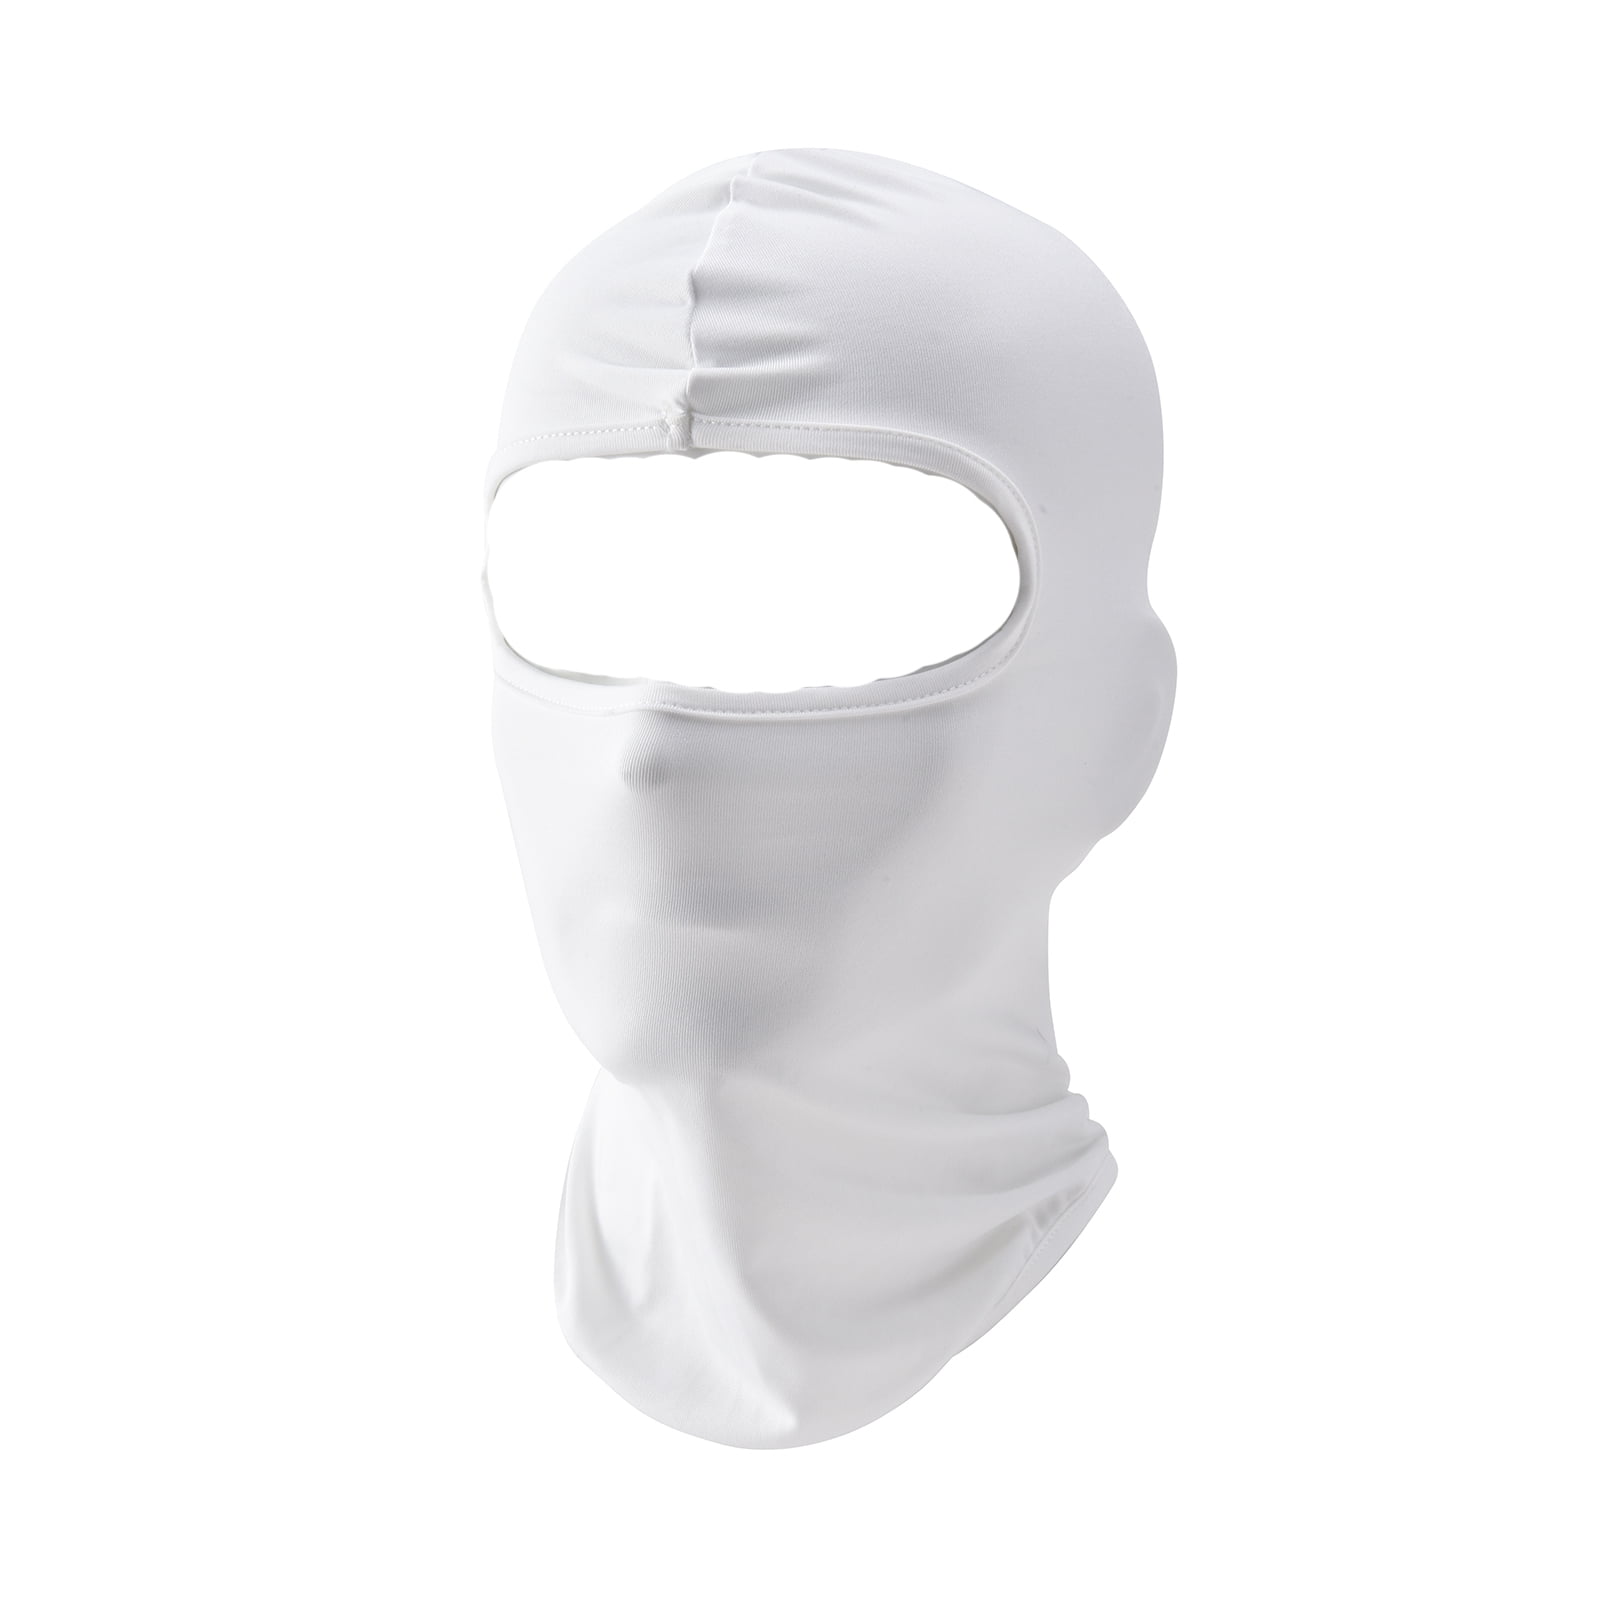 Shiesty Ski Mask for Men Full Face Mask Balaclava Pooh Shiesty mask  784672689236